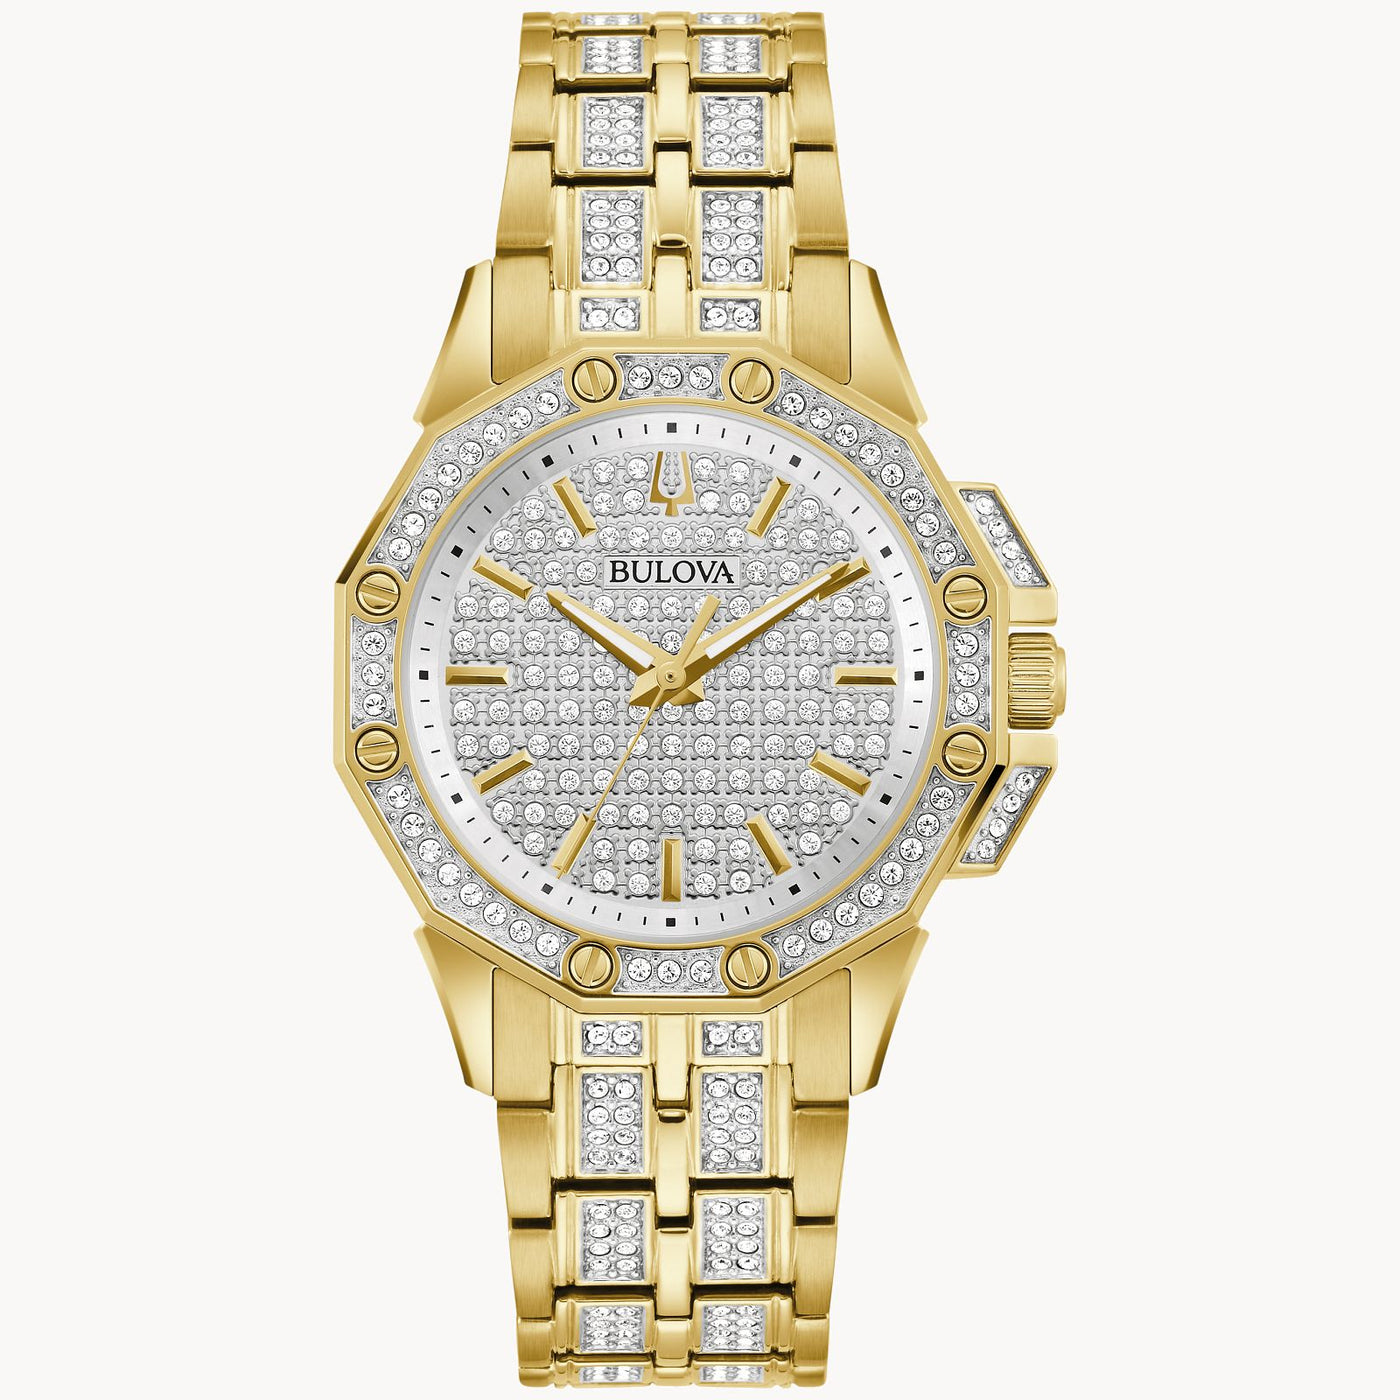 Lady's Gold Tone Bulova "Octava" Watch with Crystals